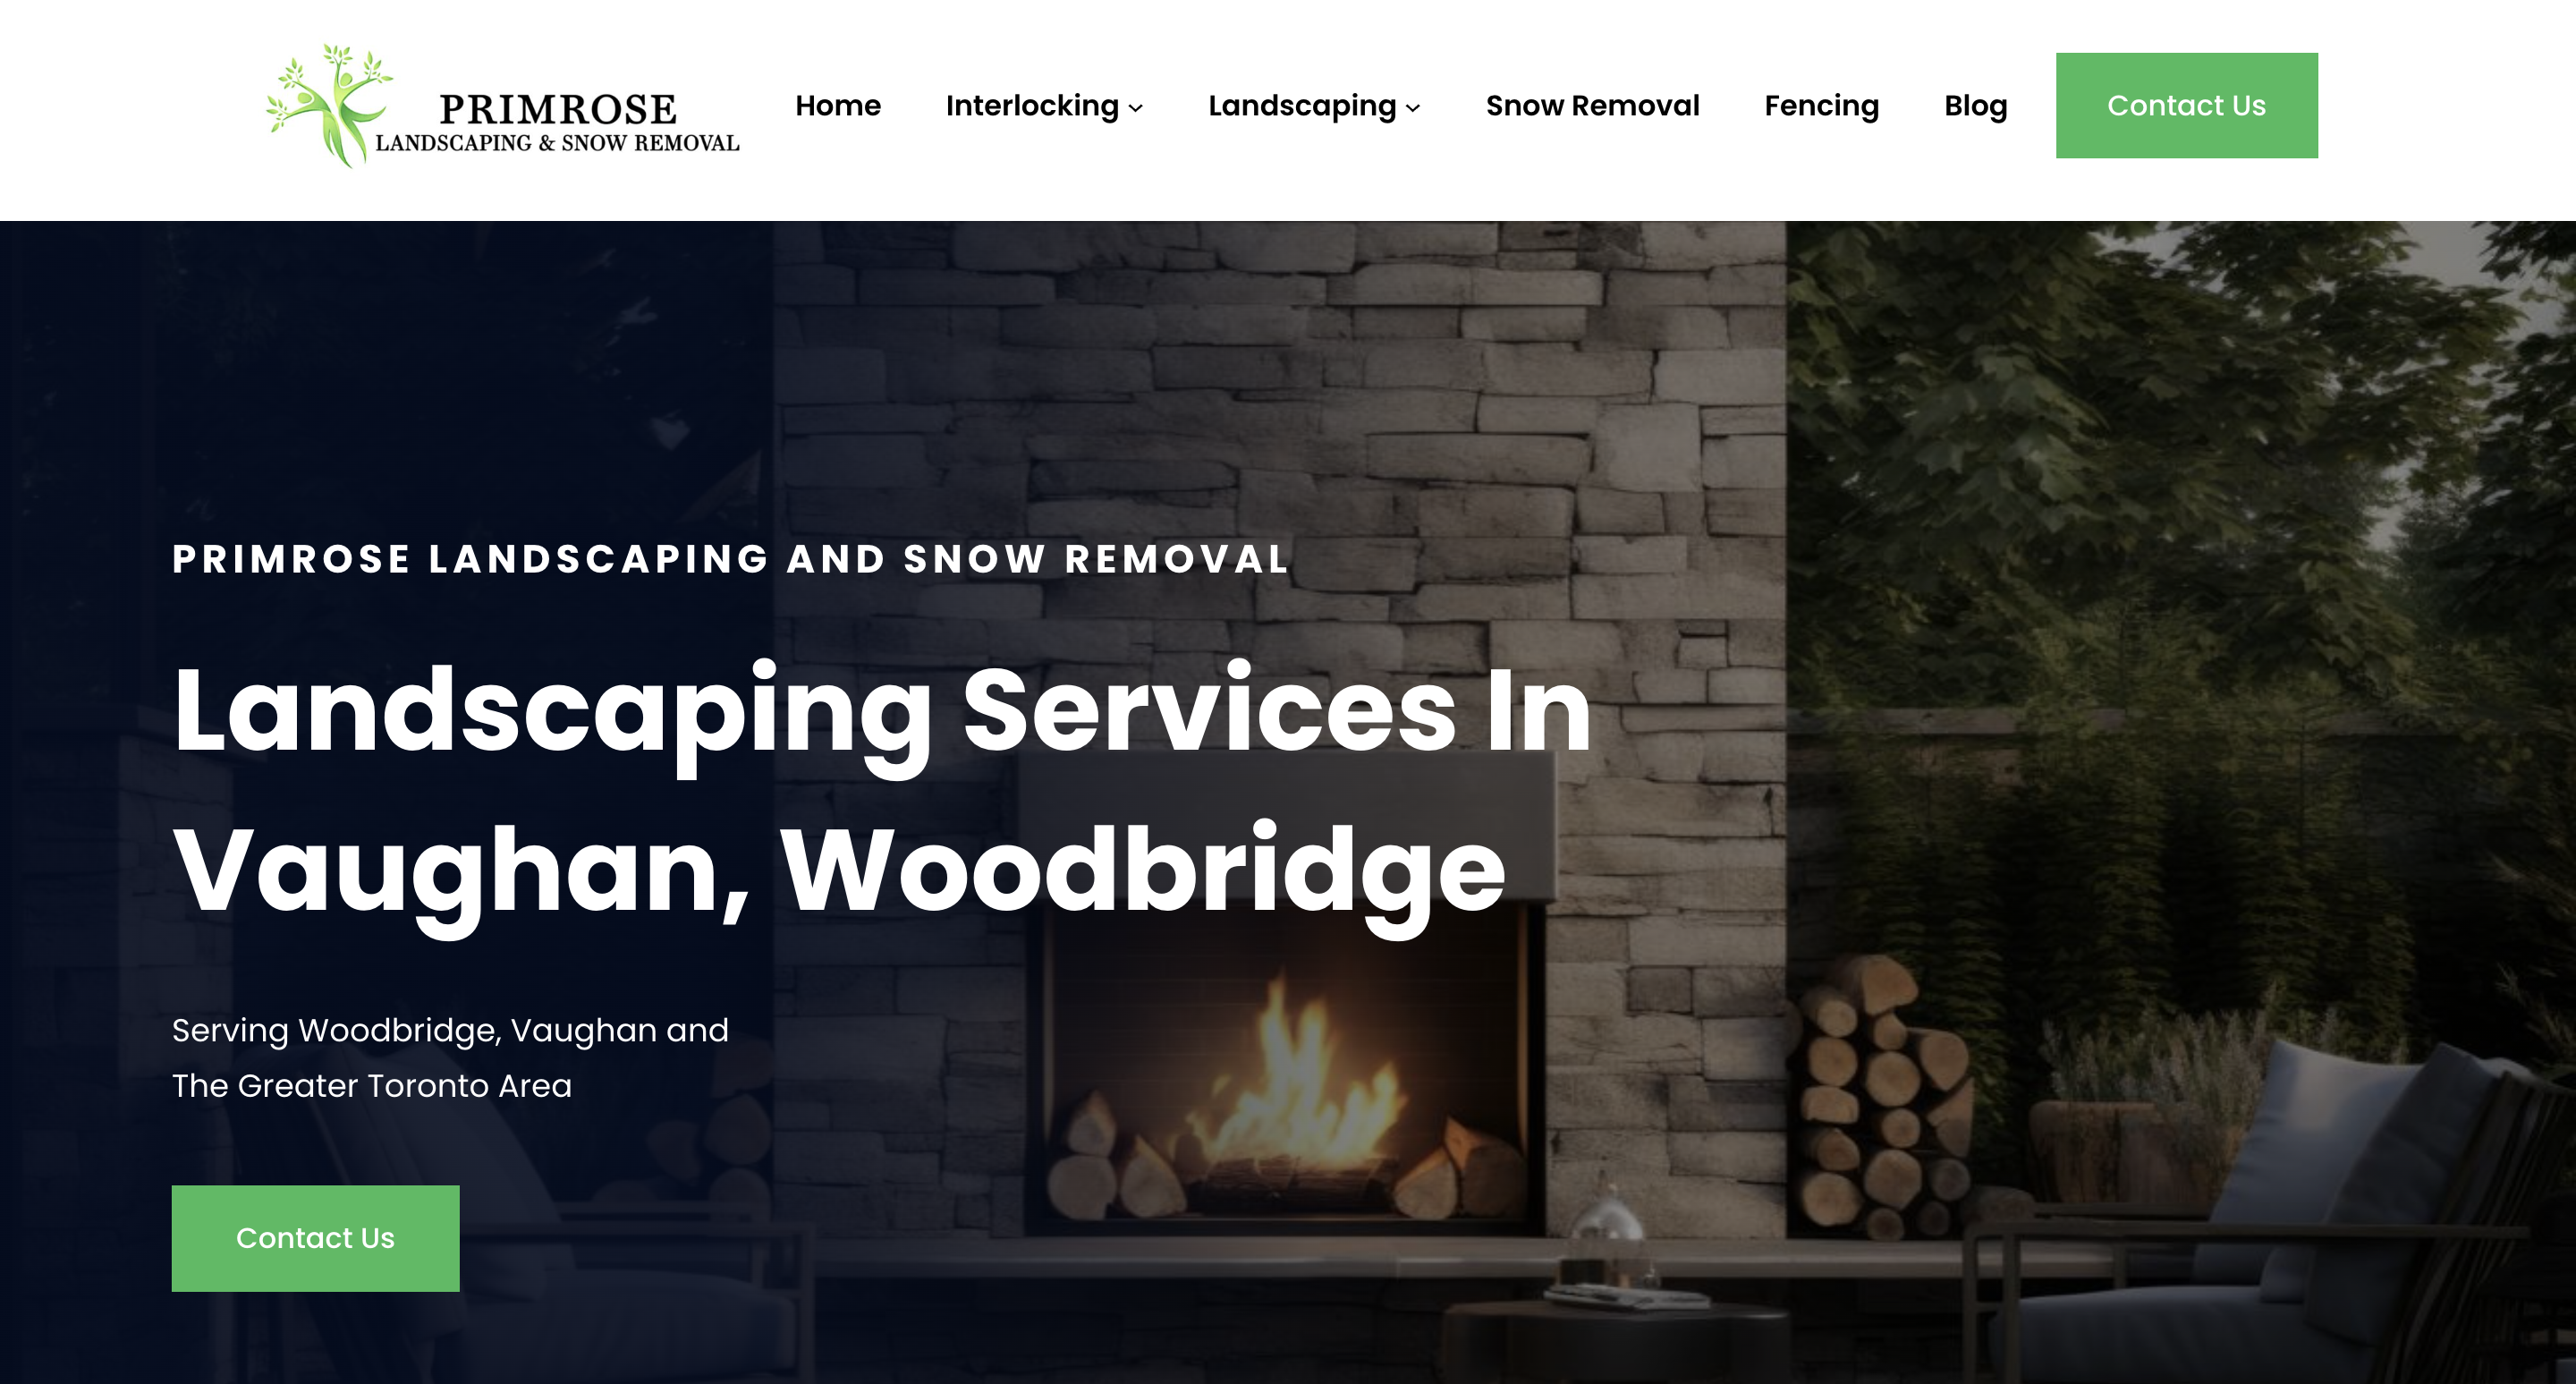 Primrose Landscaping and Snow Removal website design